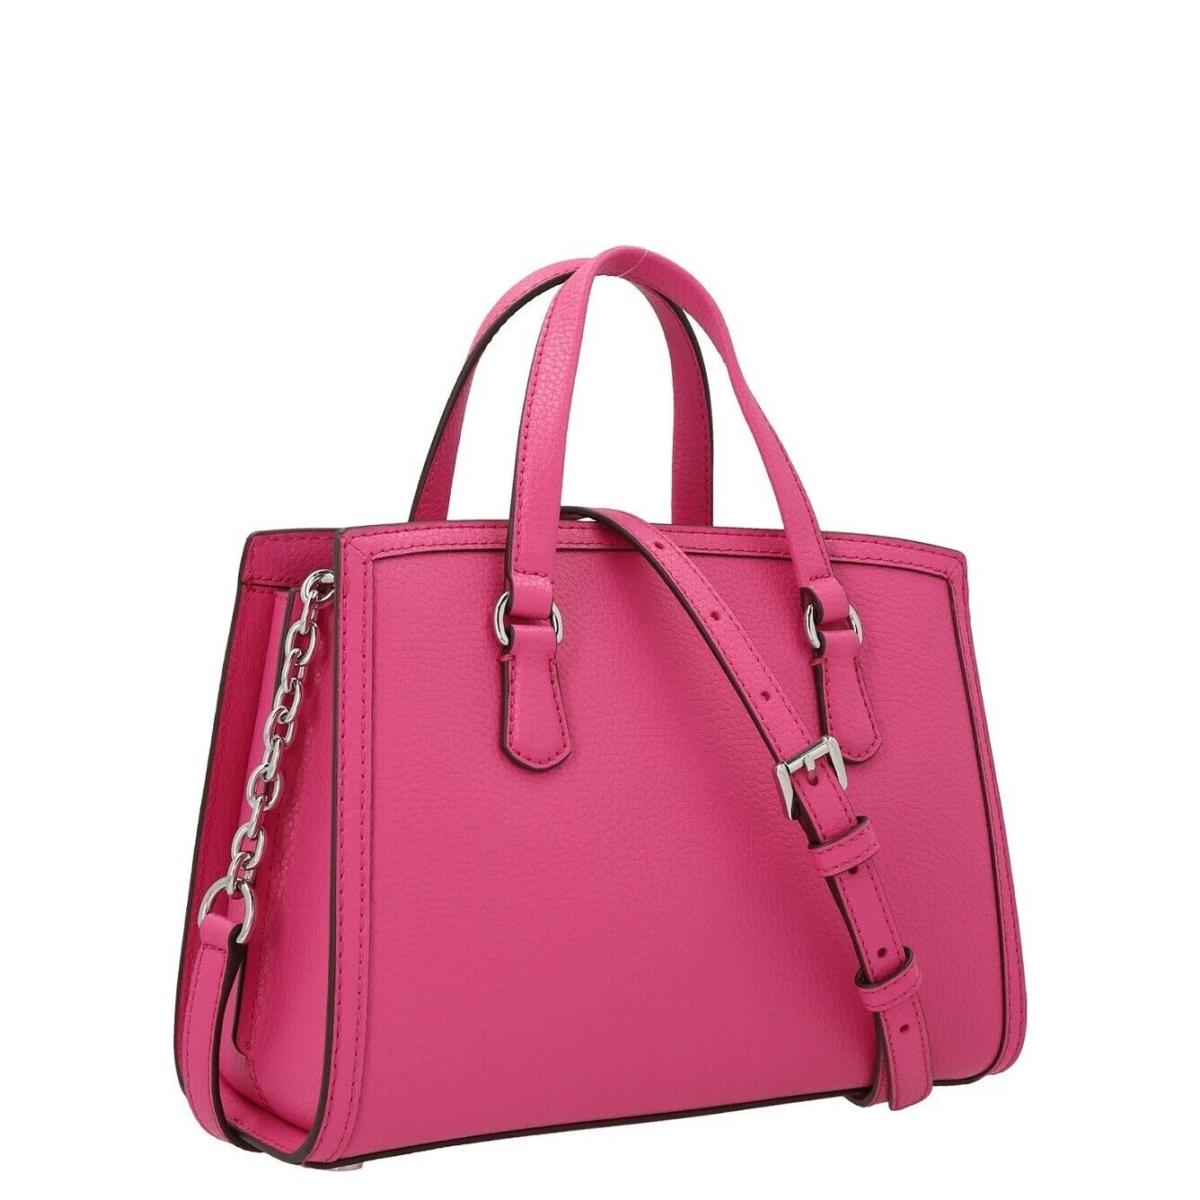 Michael Kors Women`s Chantal Cerise Small Messenger Bag - Pink Handle/Strap, Silver Hardware, Cerise Exterior